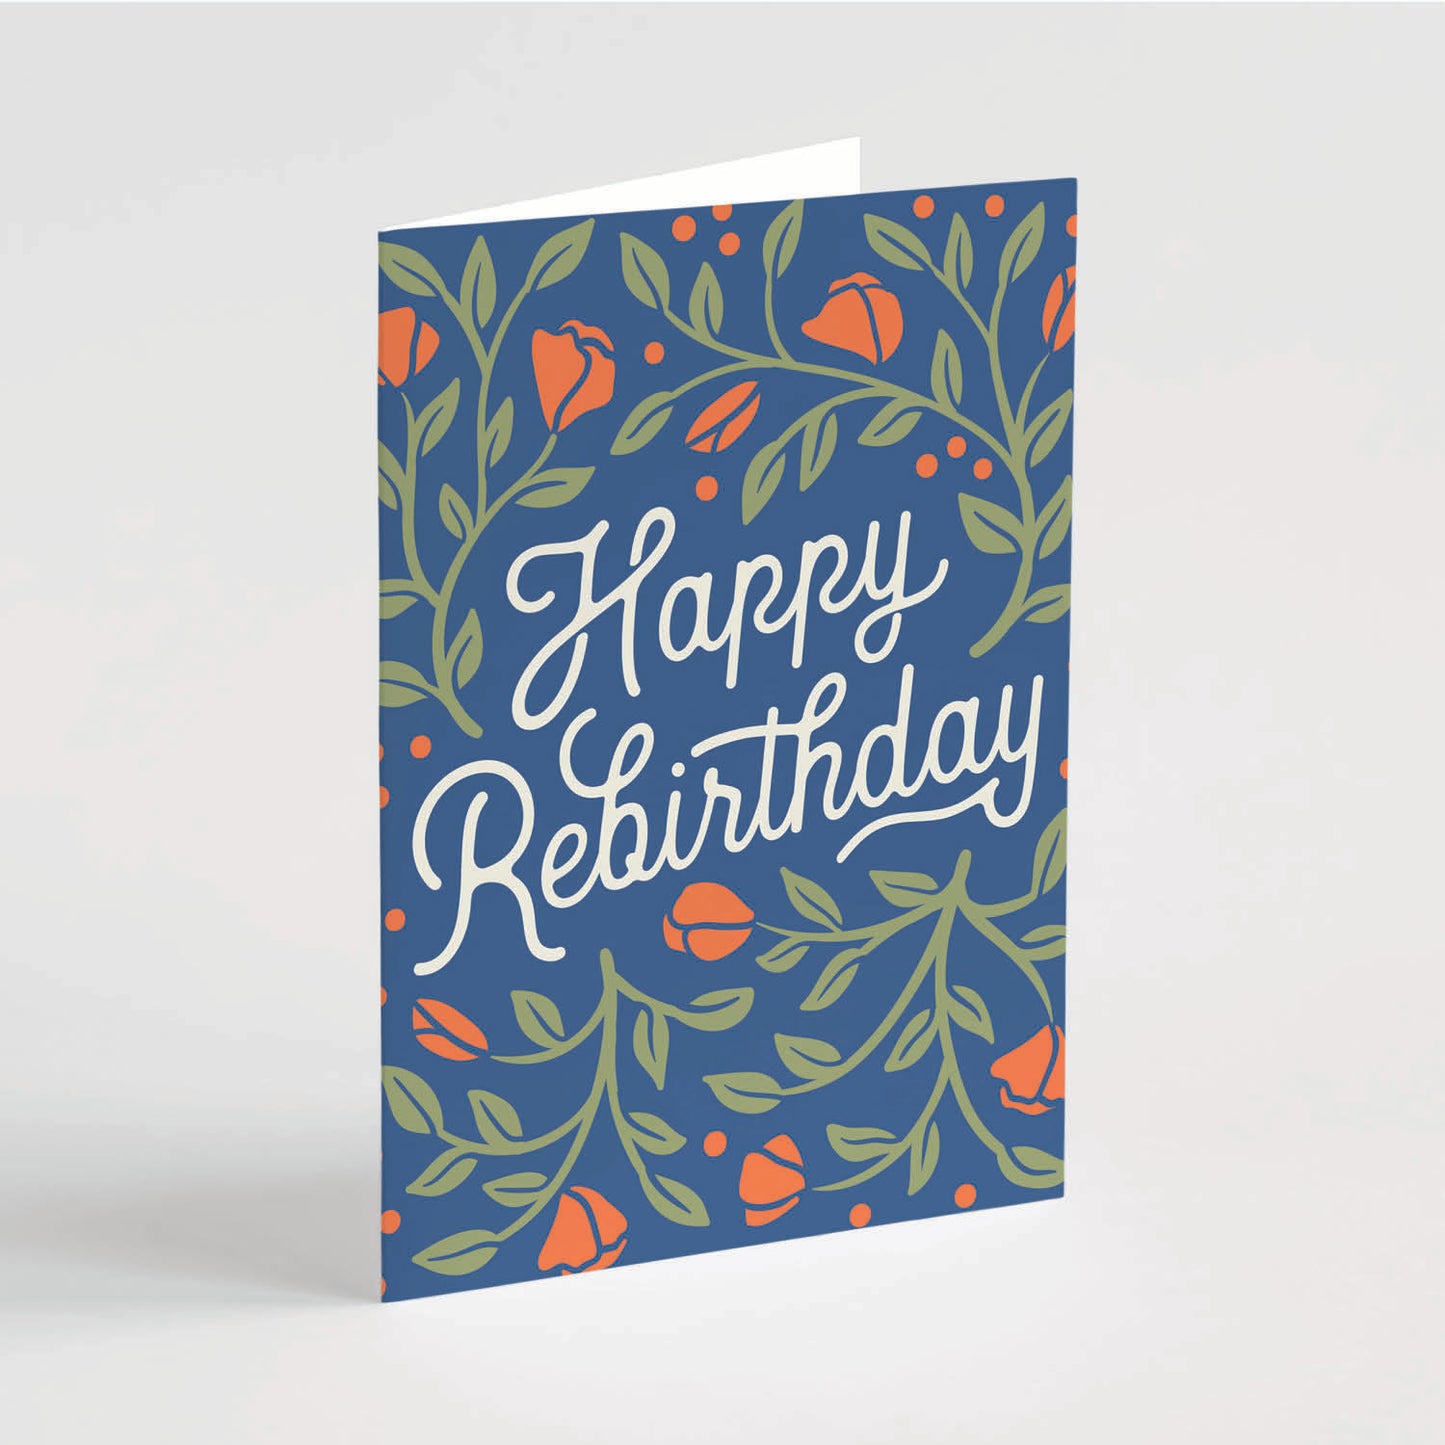 Floral Rebirth-Day Card